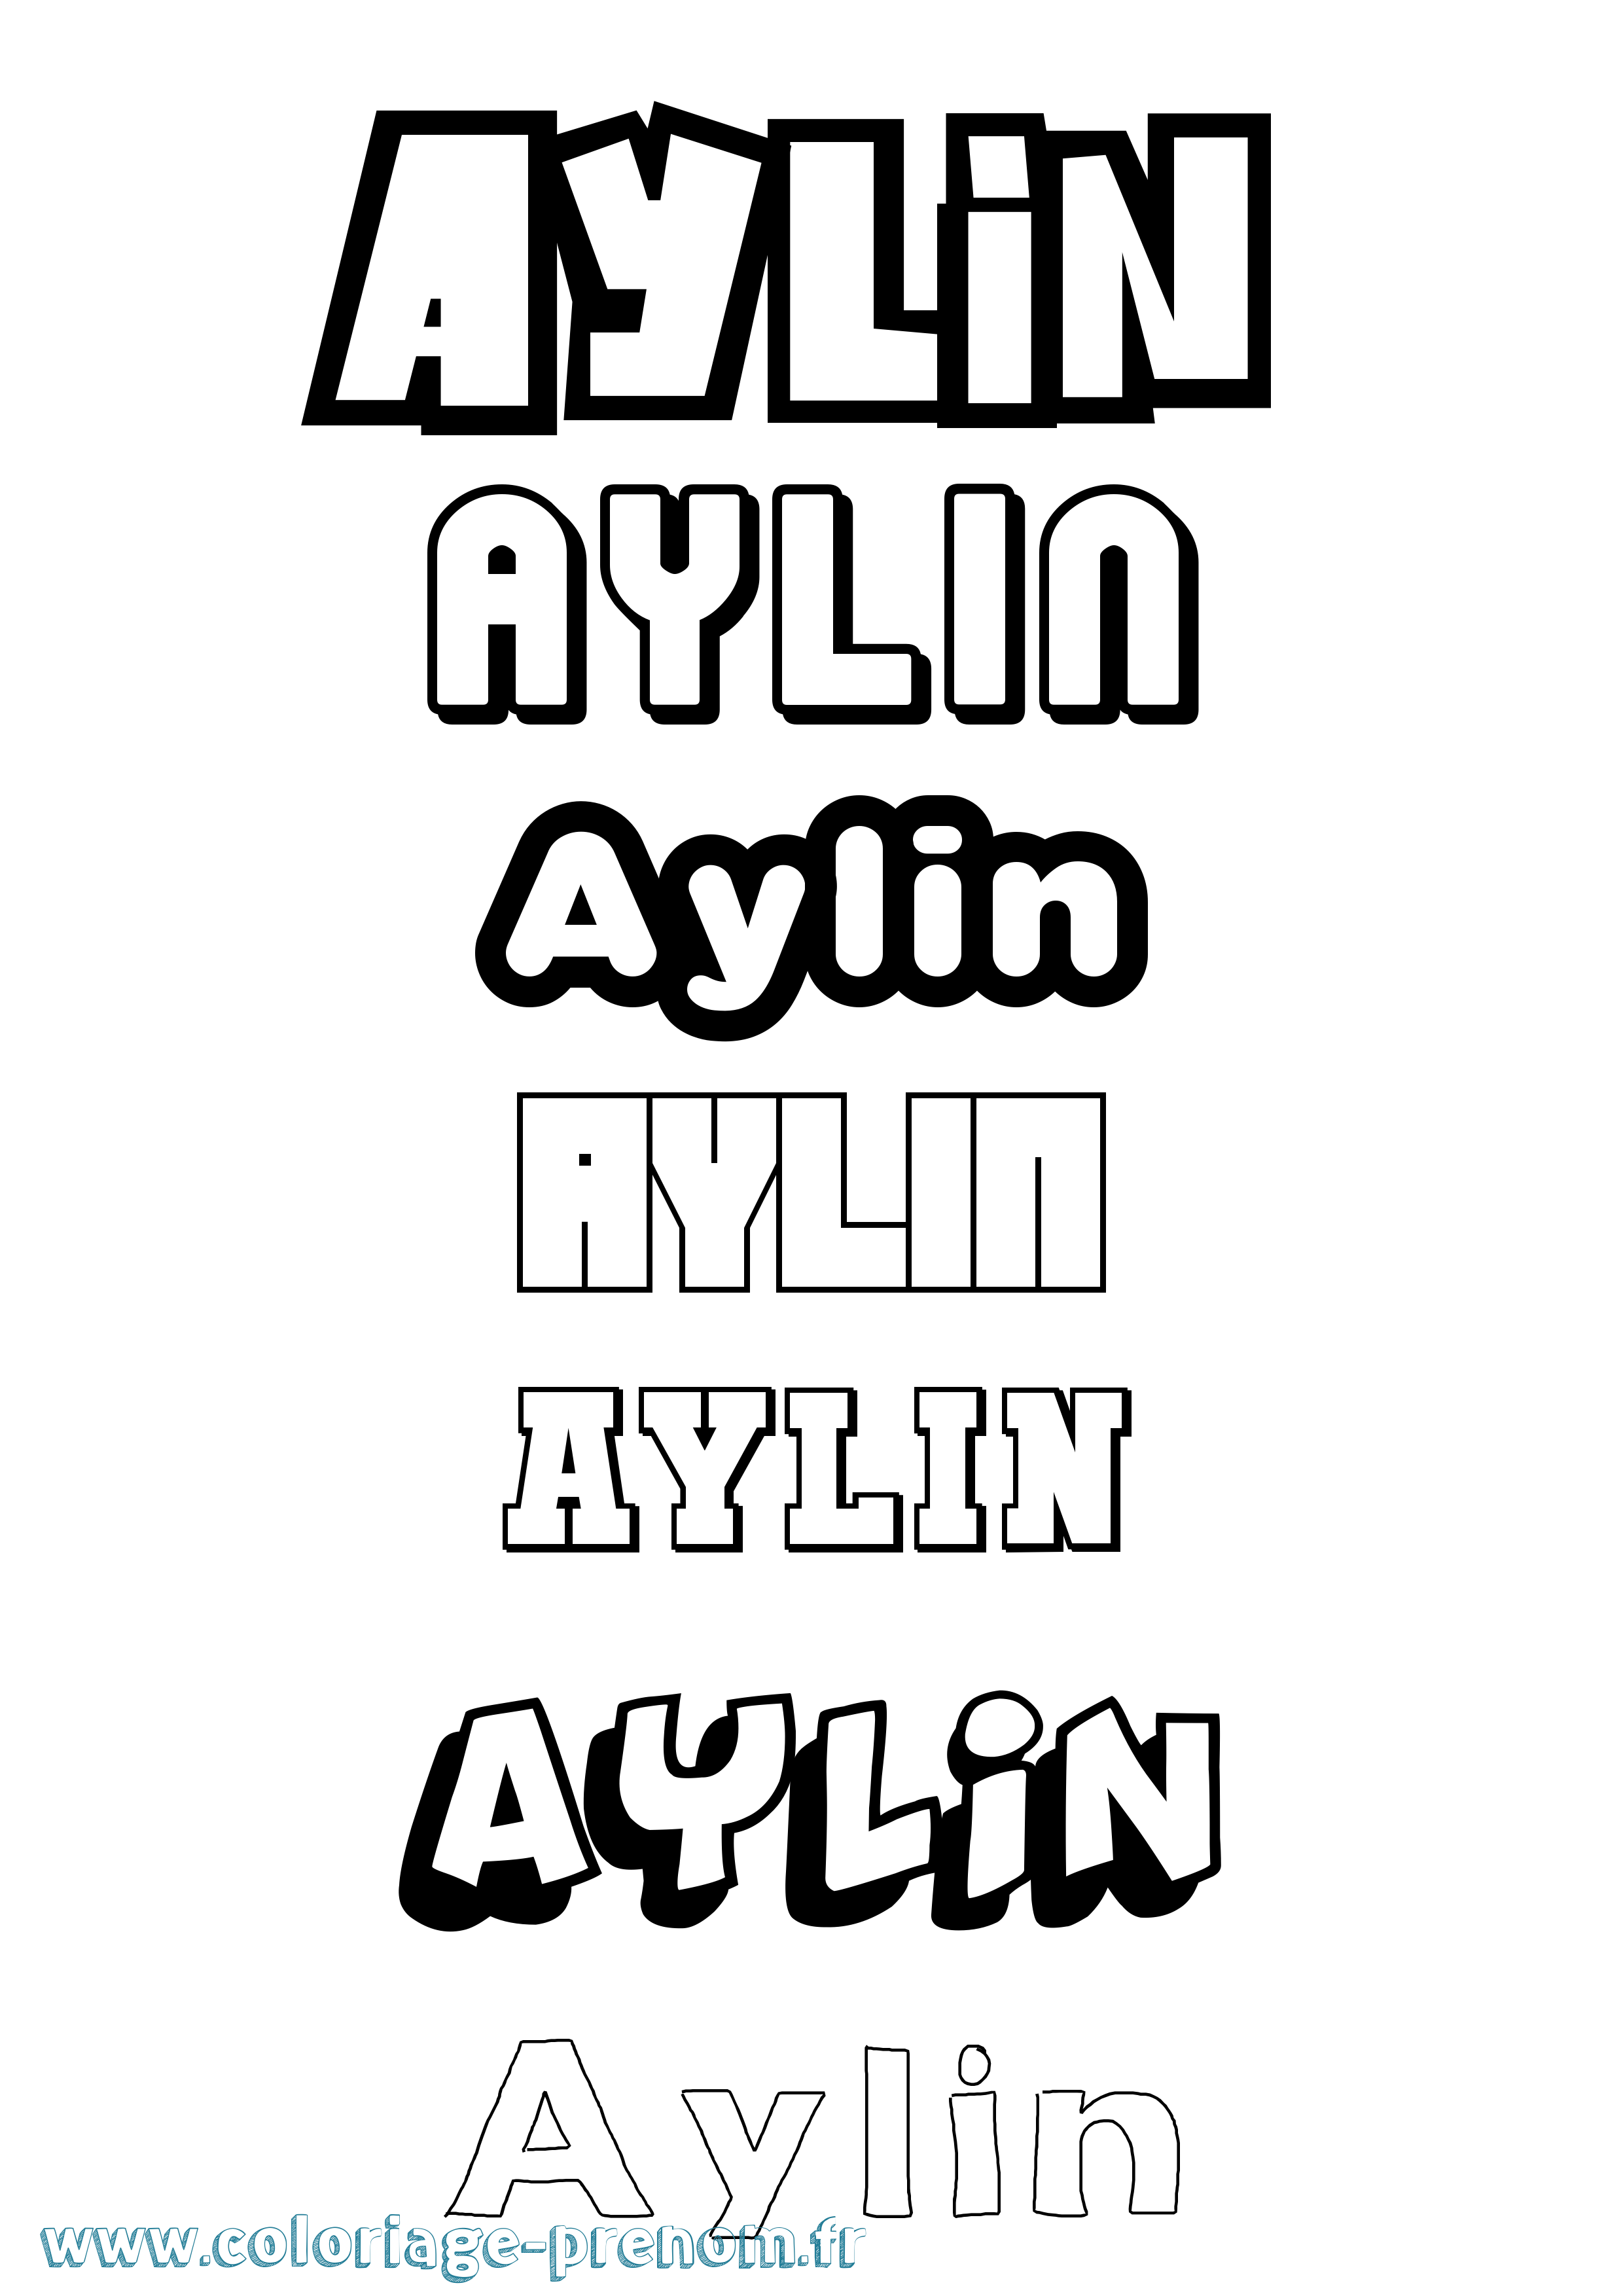 Coloriage prénom Aylin